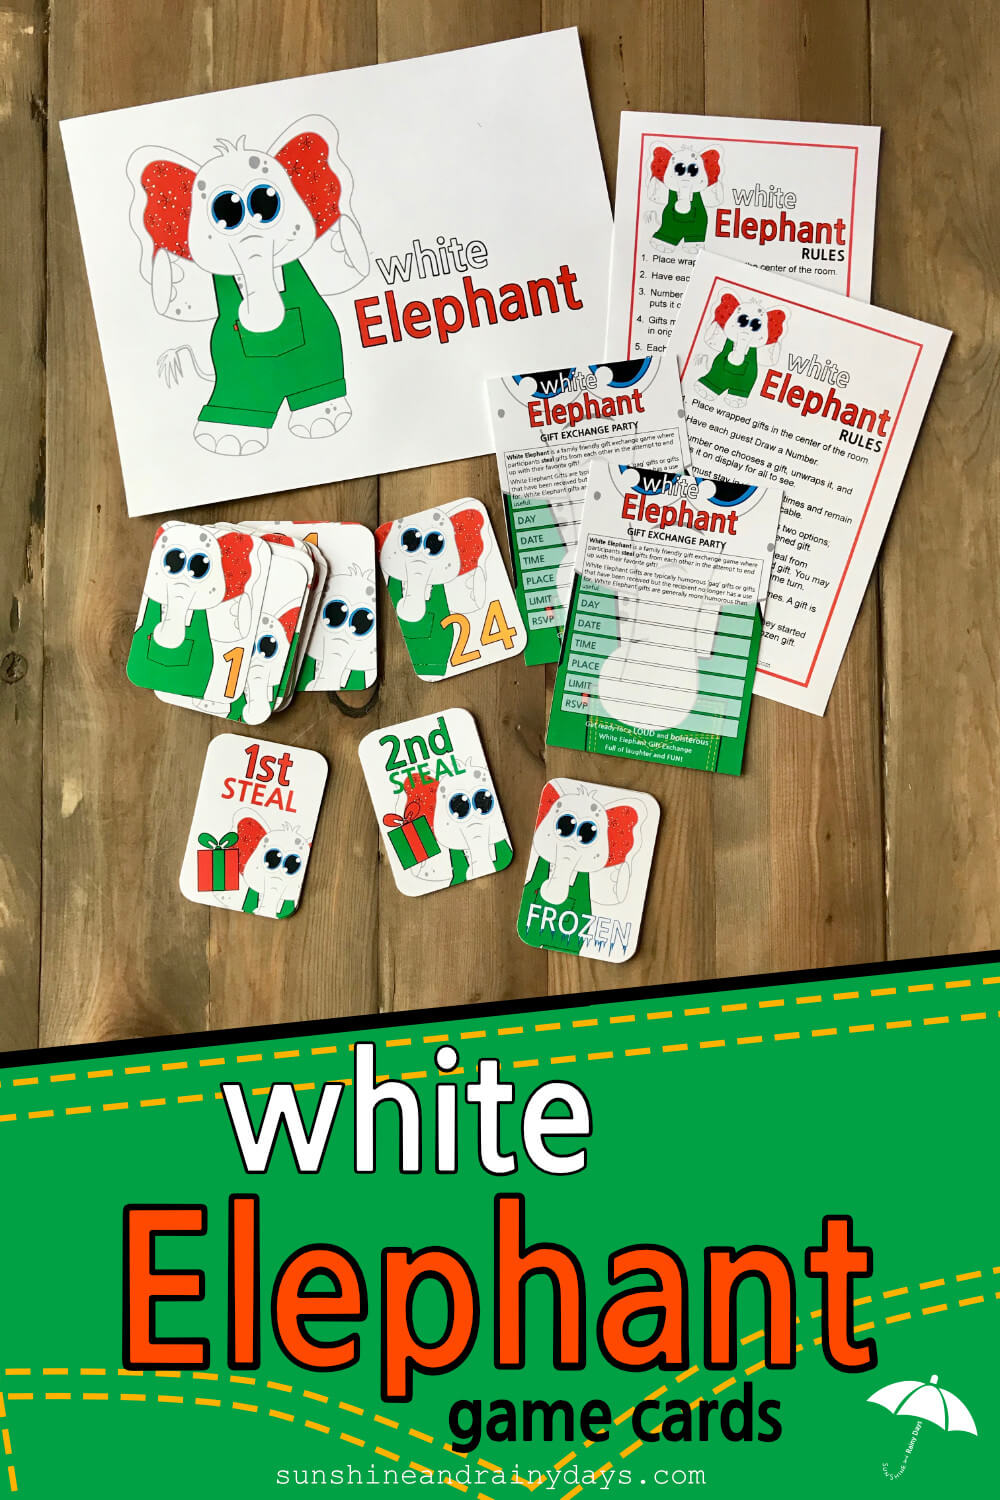 White Elephant Gift Exchange Rules –